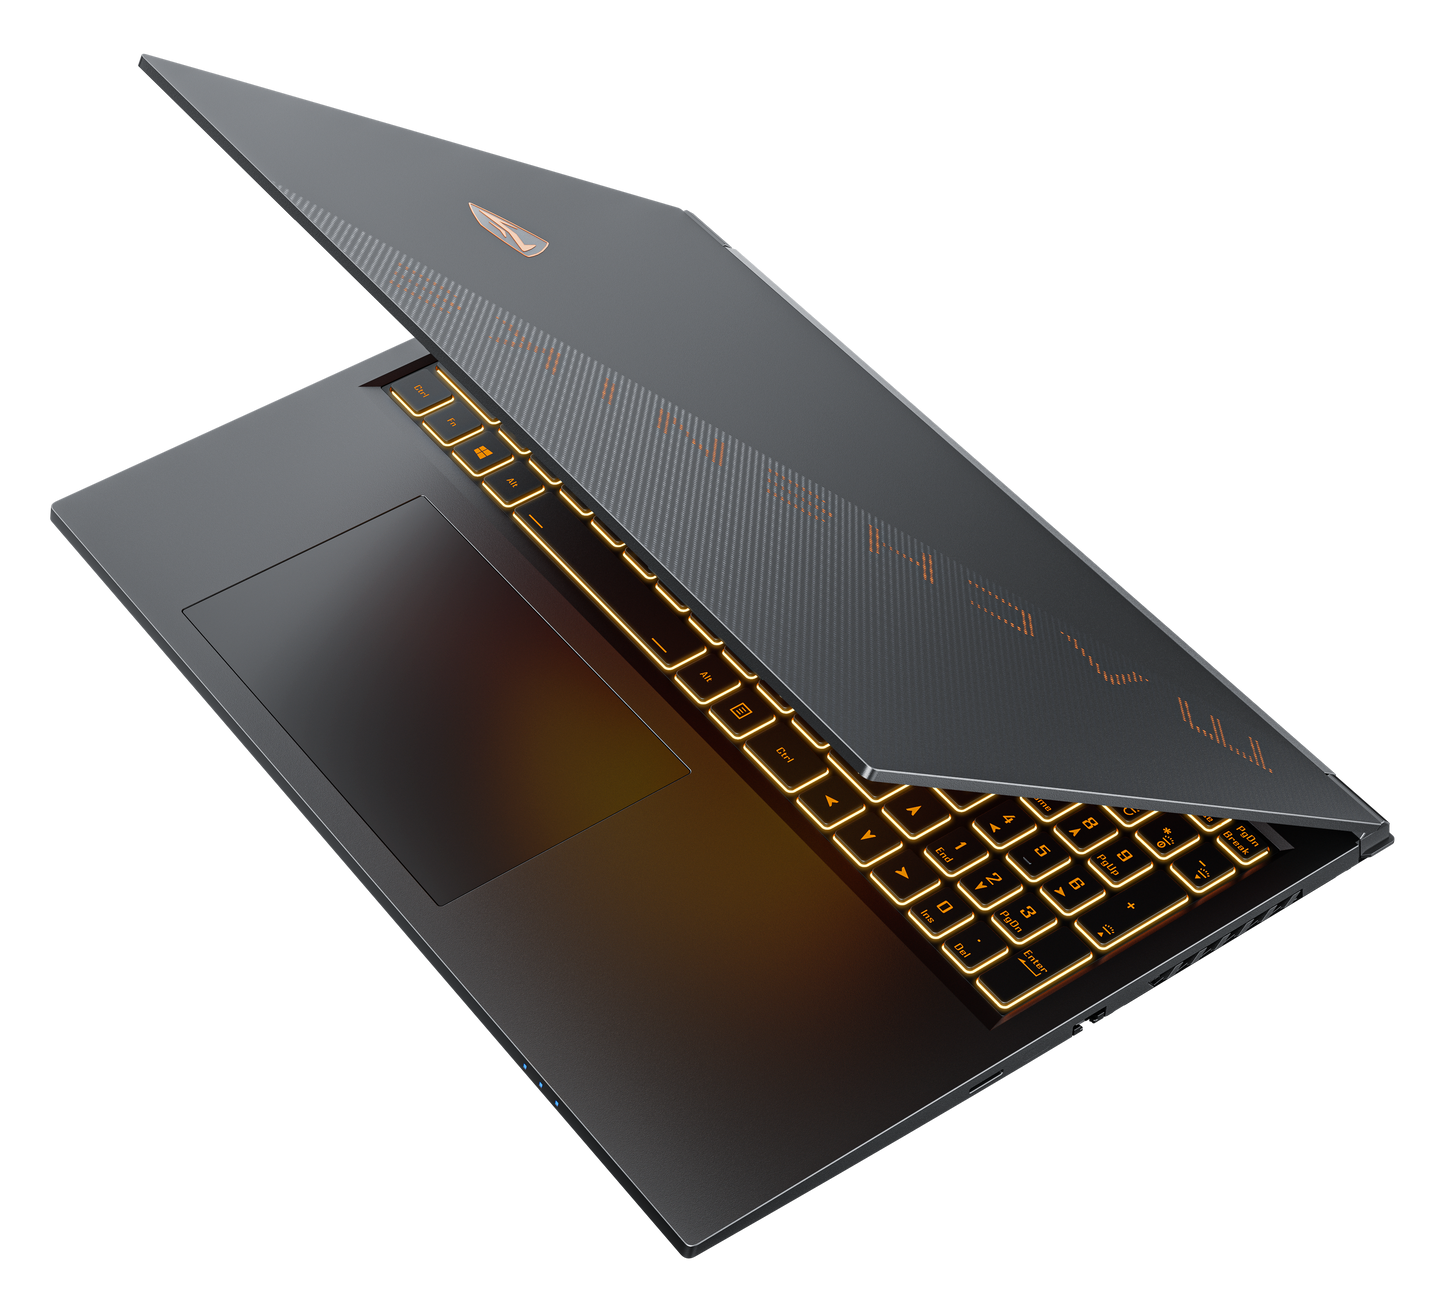 MACHENIKE S16 Gen 12 Intel (15,6 ”) Laptop para jogos - Orange